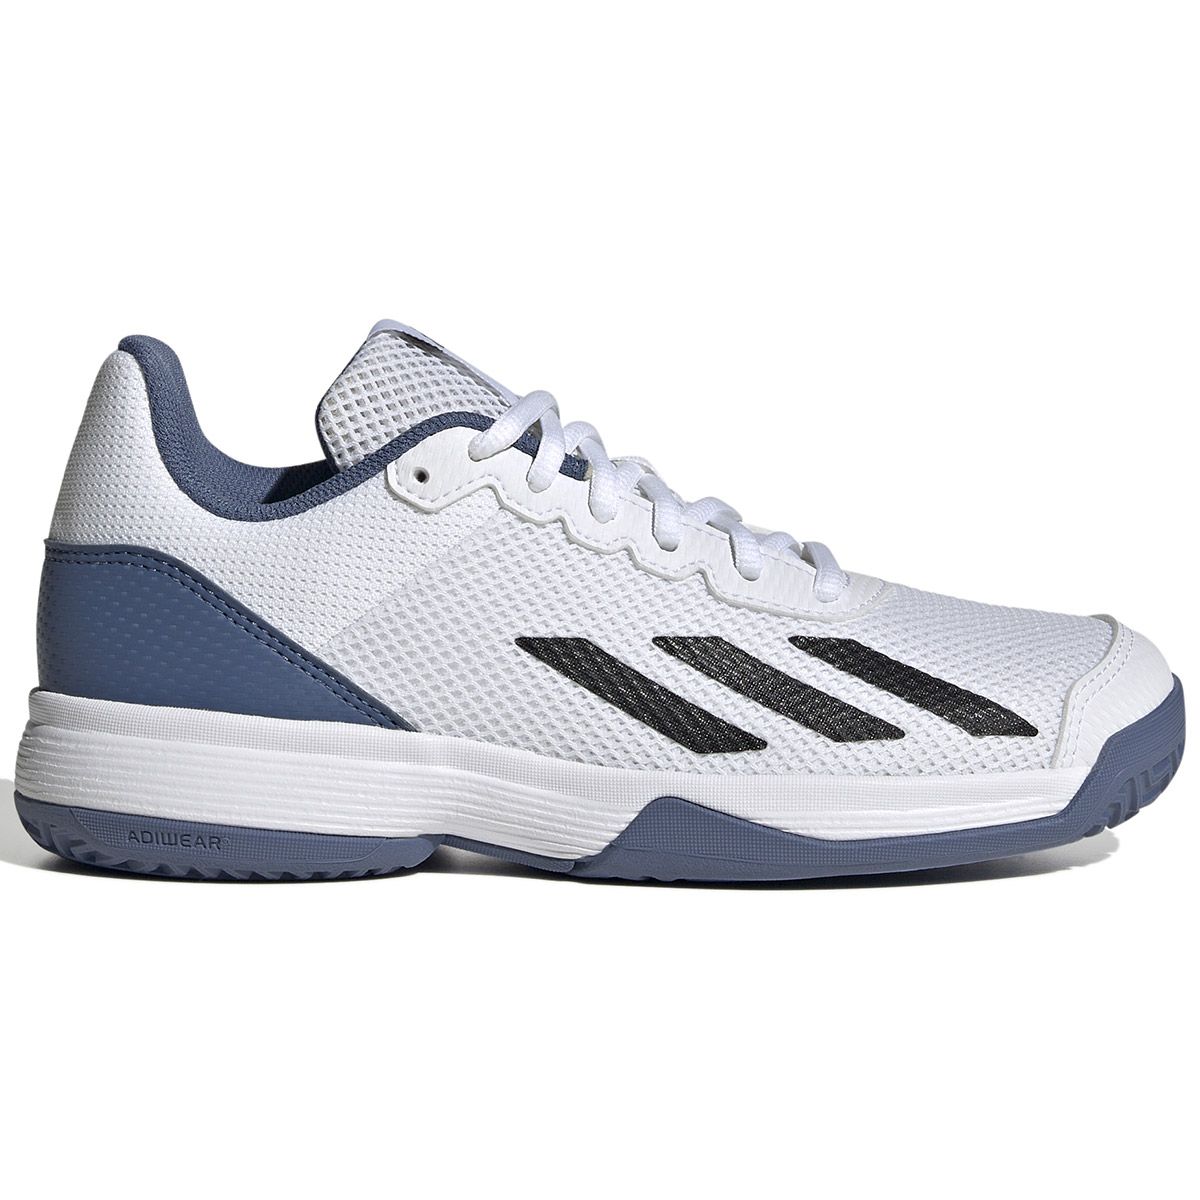 adidas Courtflash Kids Tennis Shoes IG9536